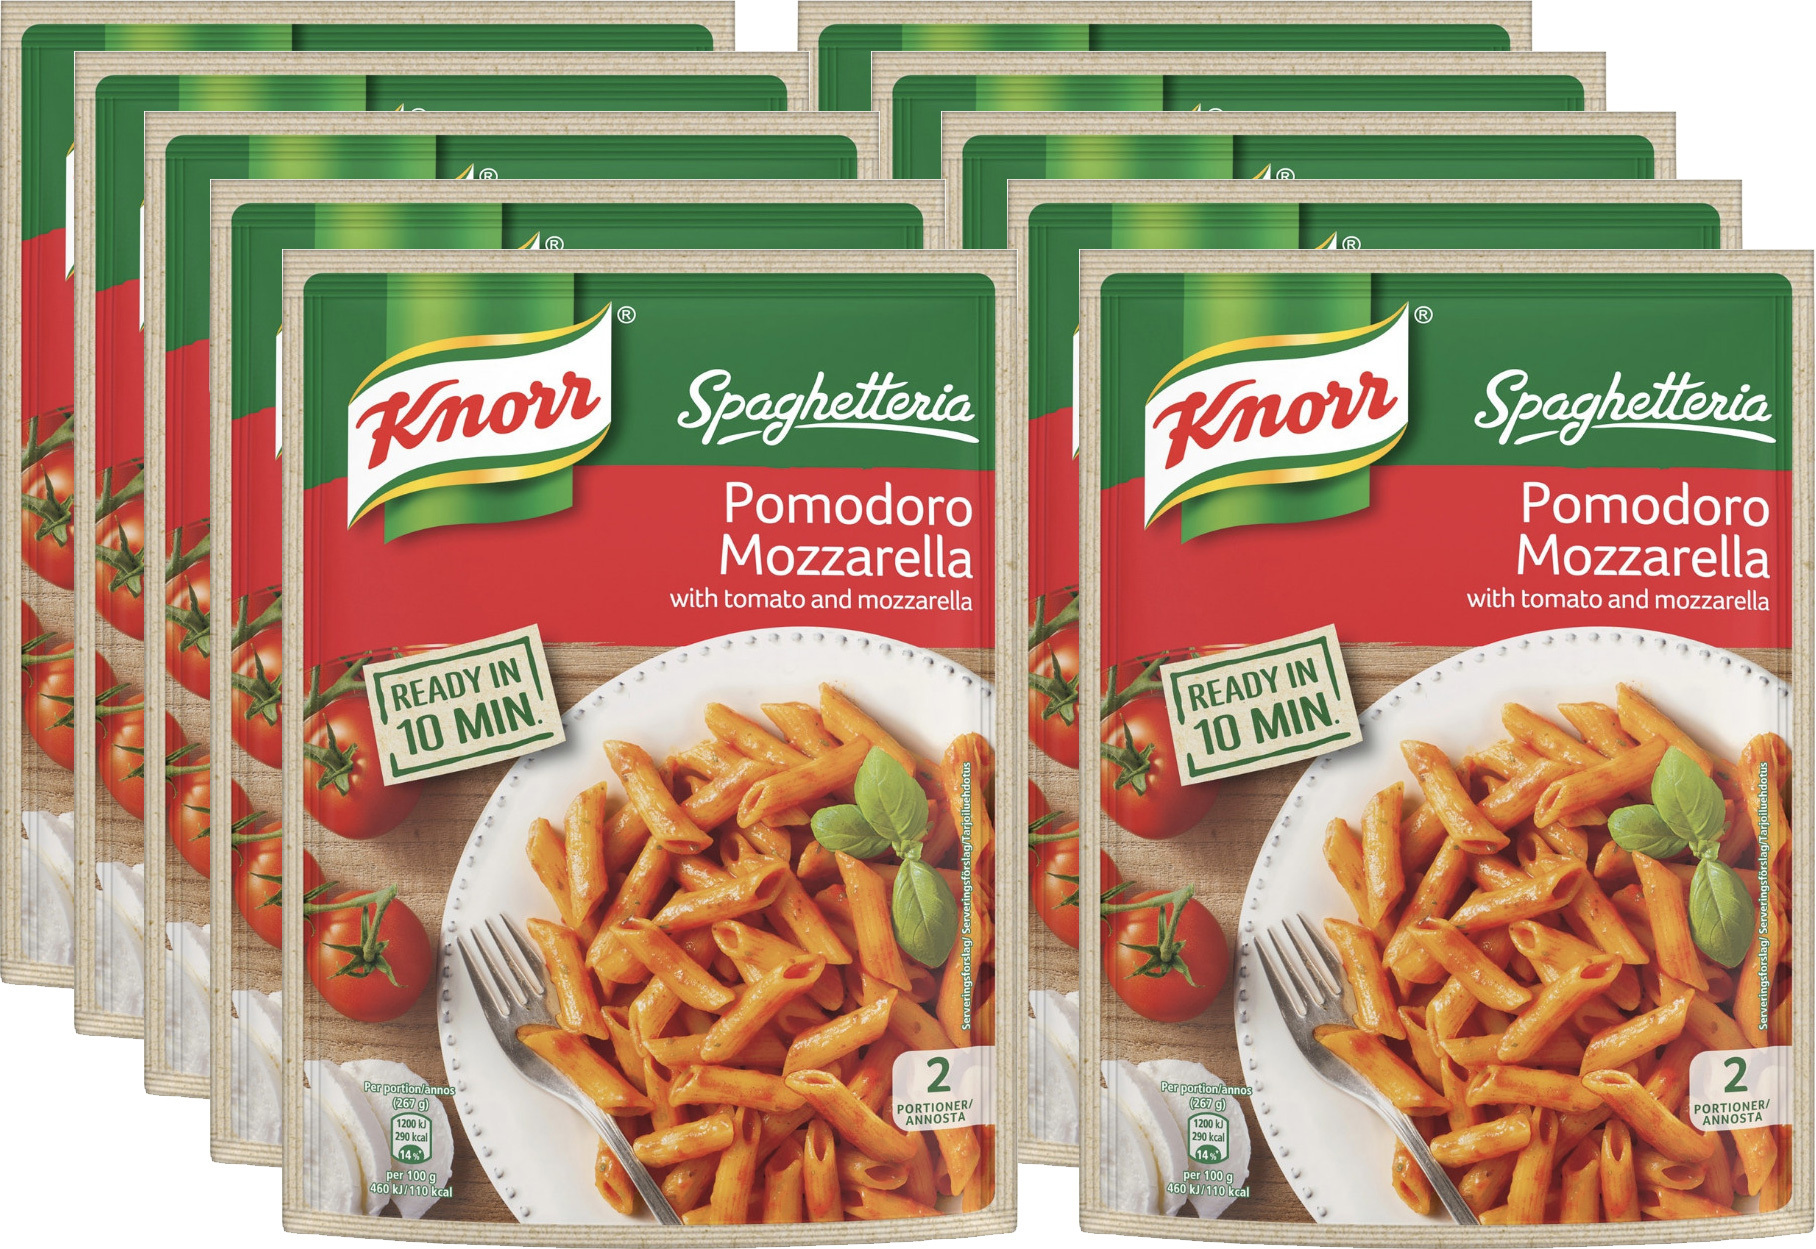 Макароны Knorr Spaghetteria Pomodoro Mozzarella 163 г 10 шт. купить по цене  3146 руб. в интернет-магазине Euromade